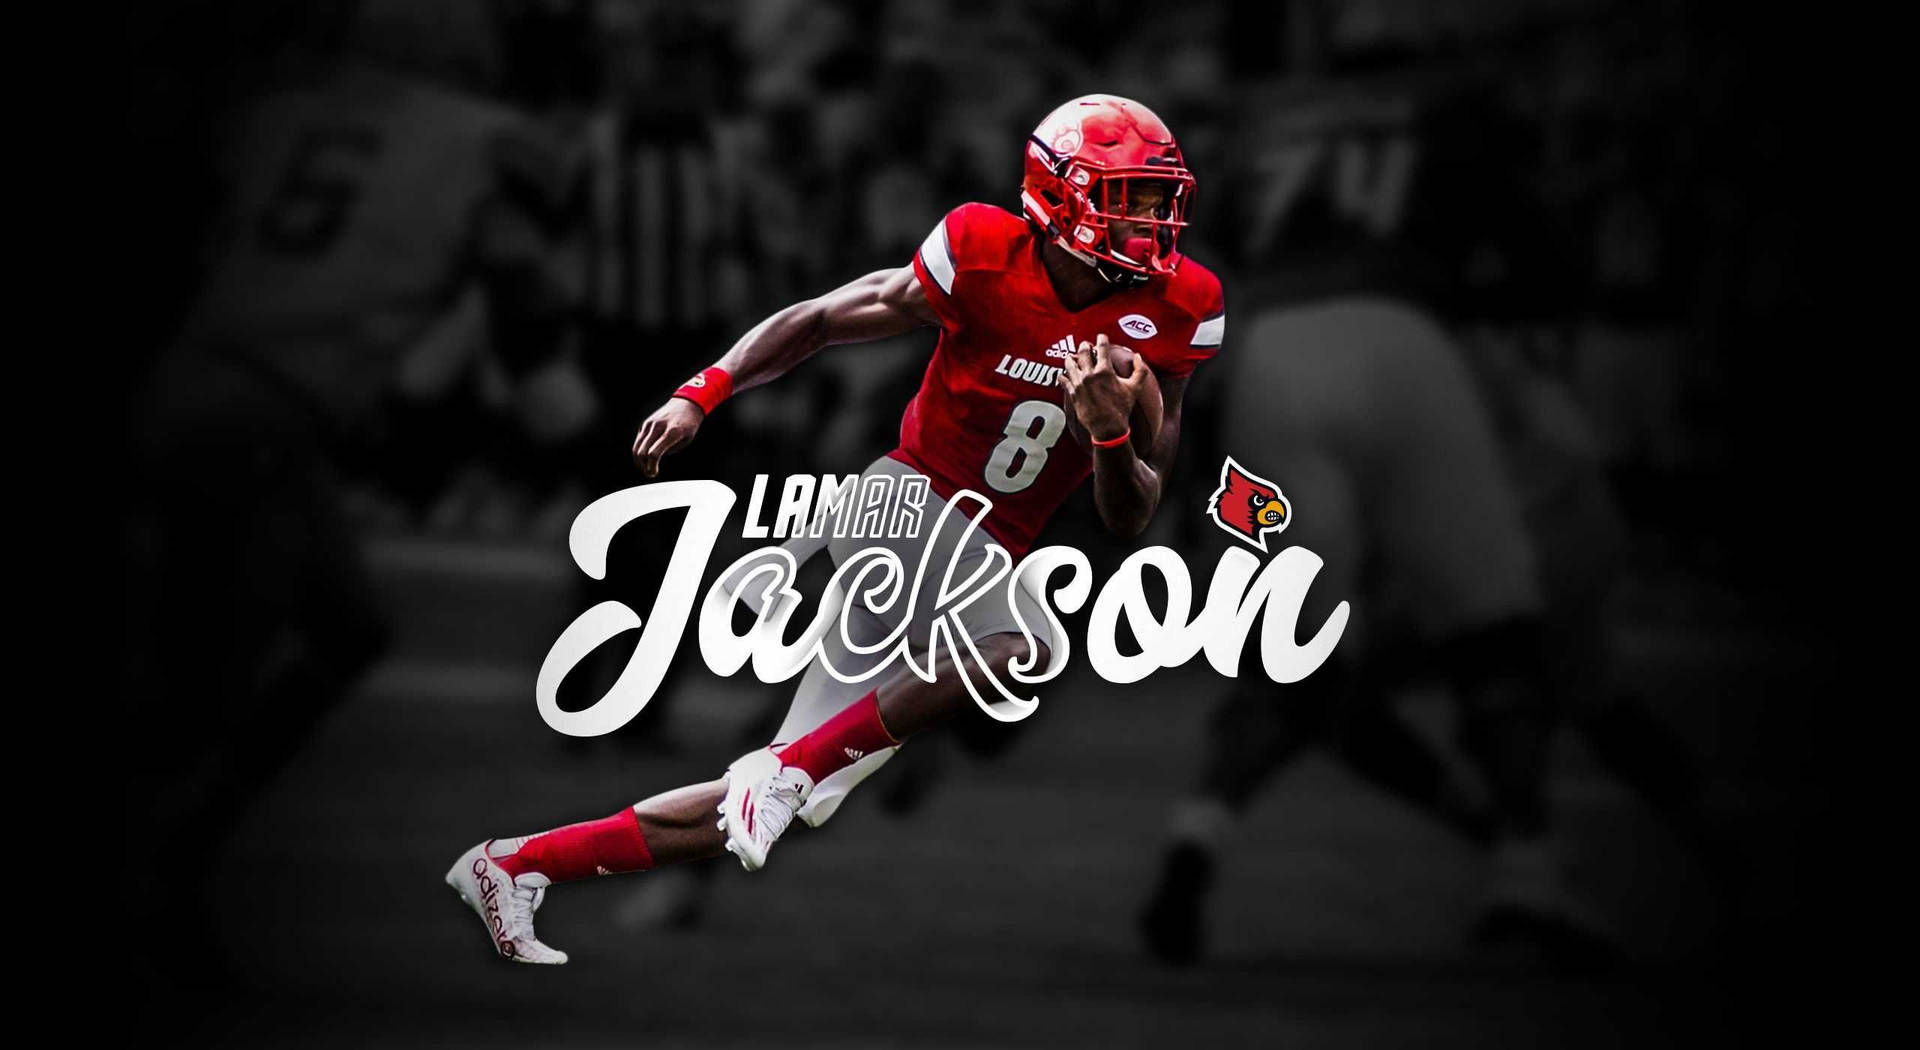 Lamar Jackson Running With Cradled Ball Background